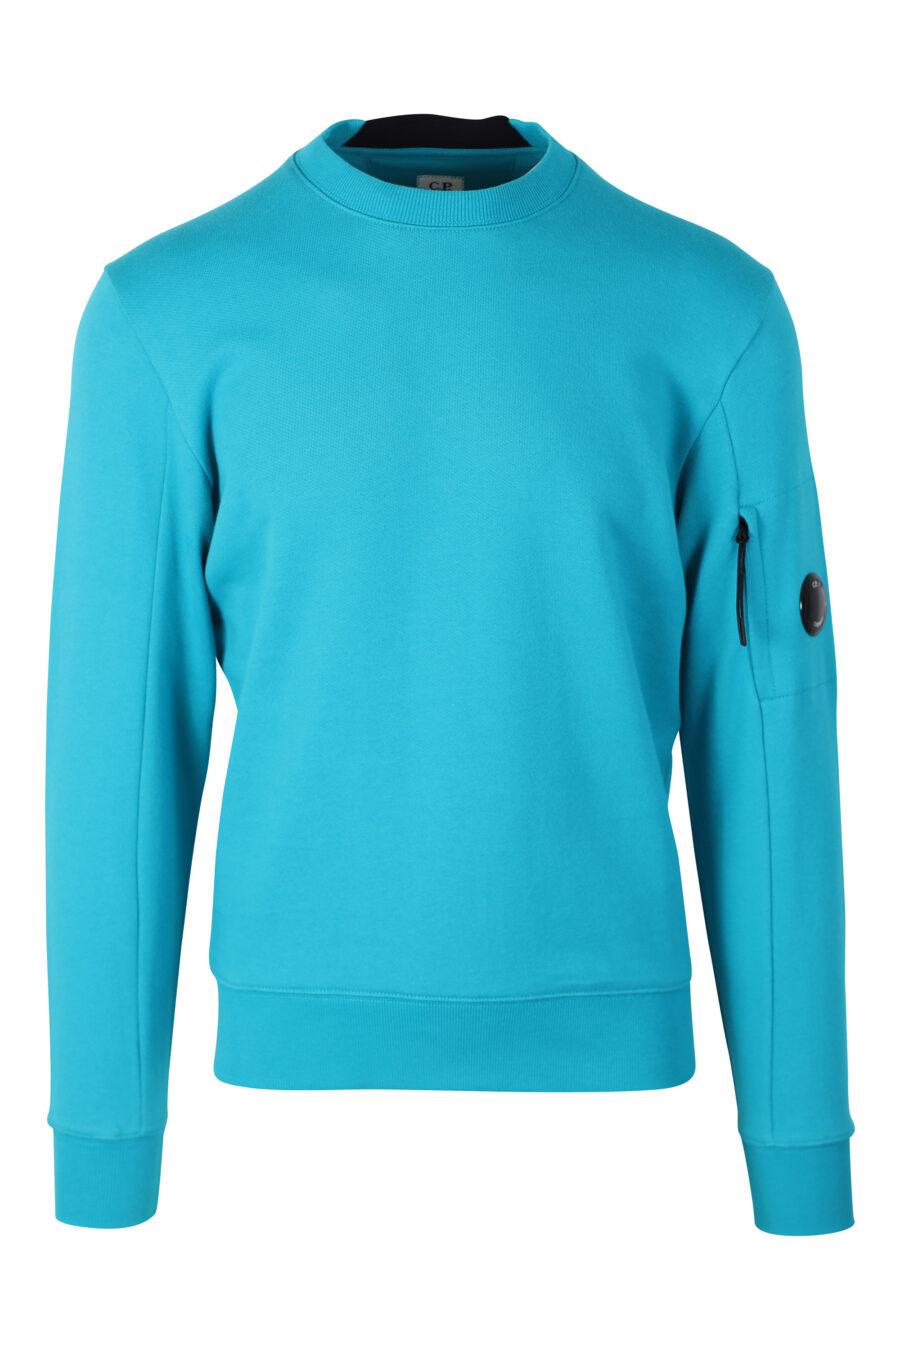 Turquoise sweatshirt with circular mini-logo on the side - IMG 2400